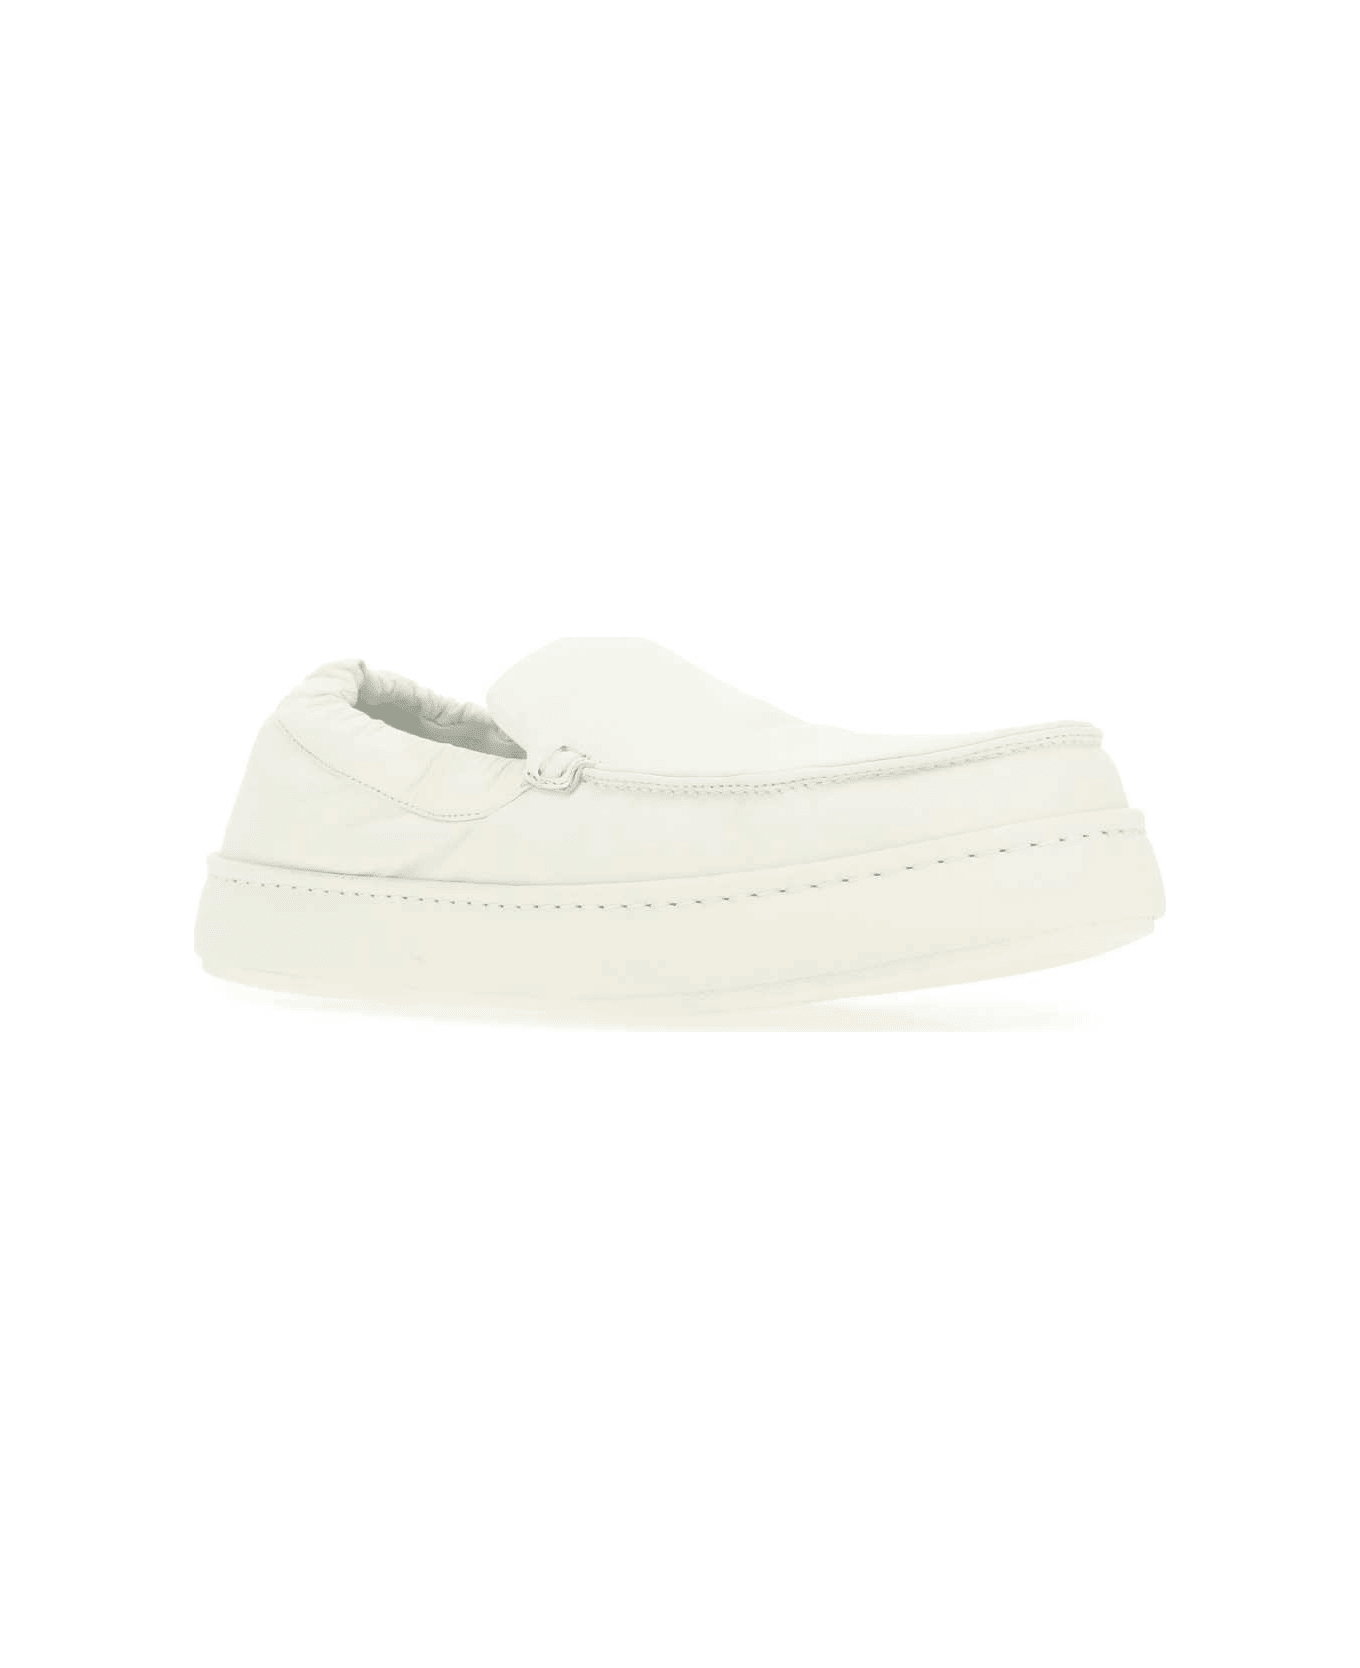 Zegna White Nappa Leather Loafers - LGI